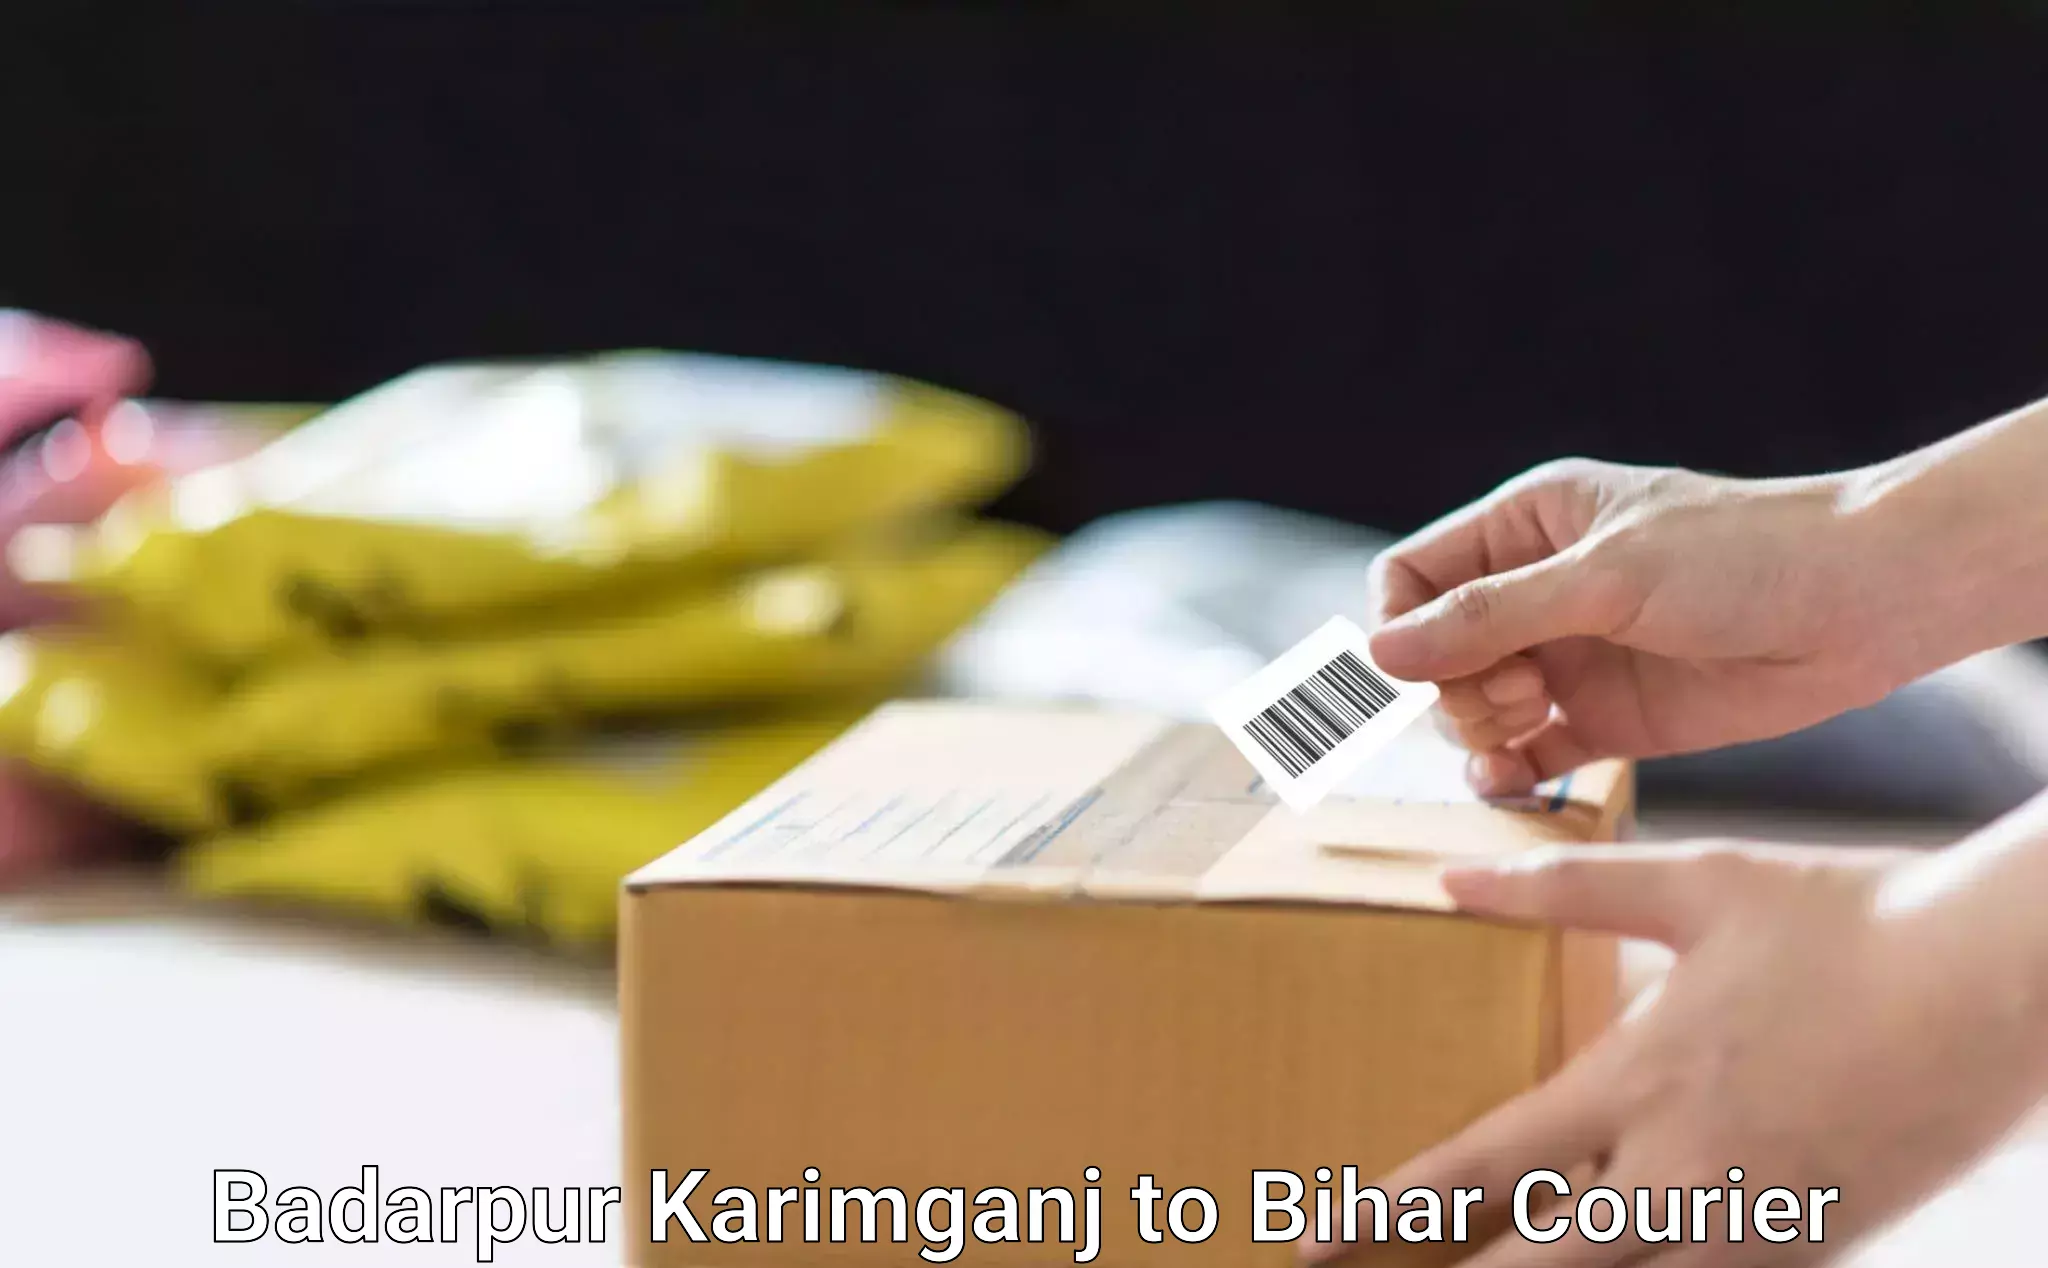 Courier service partnerships Badarpur Karimganj to Supaul